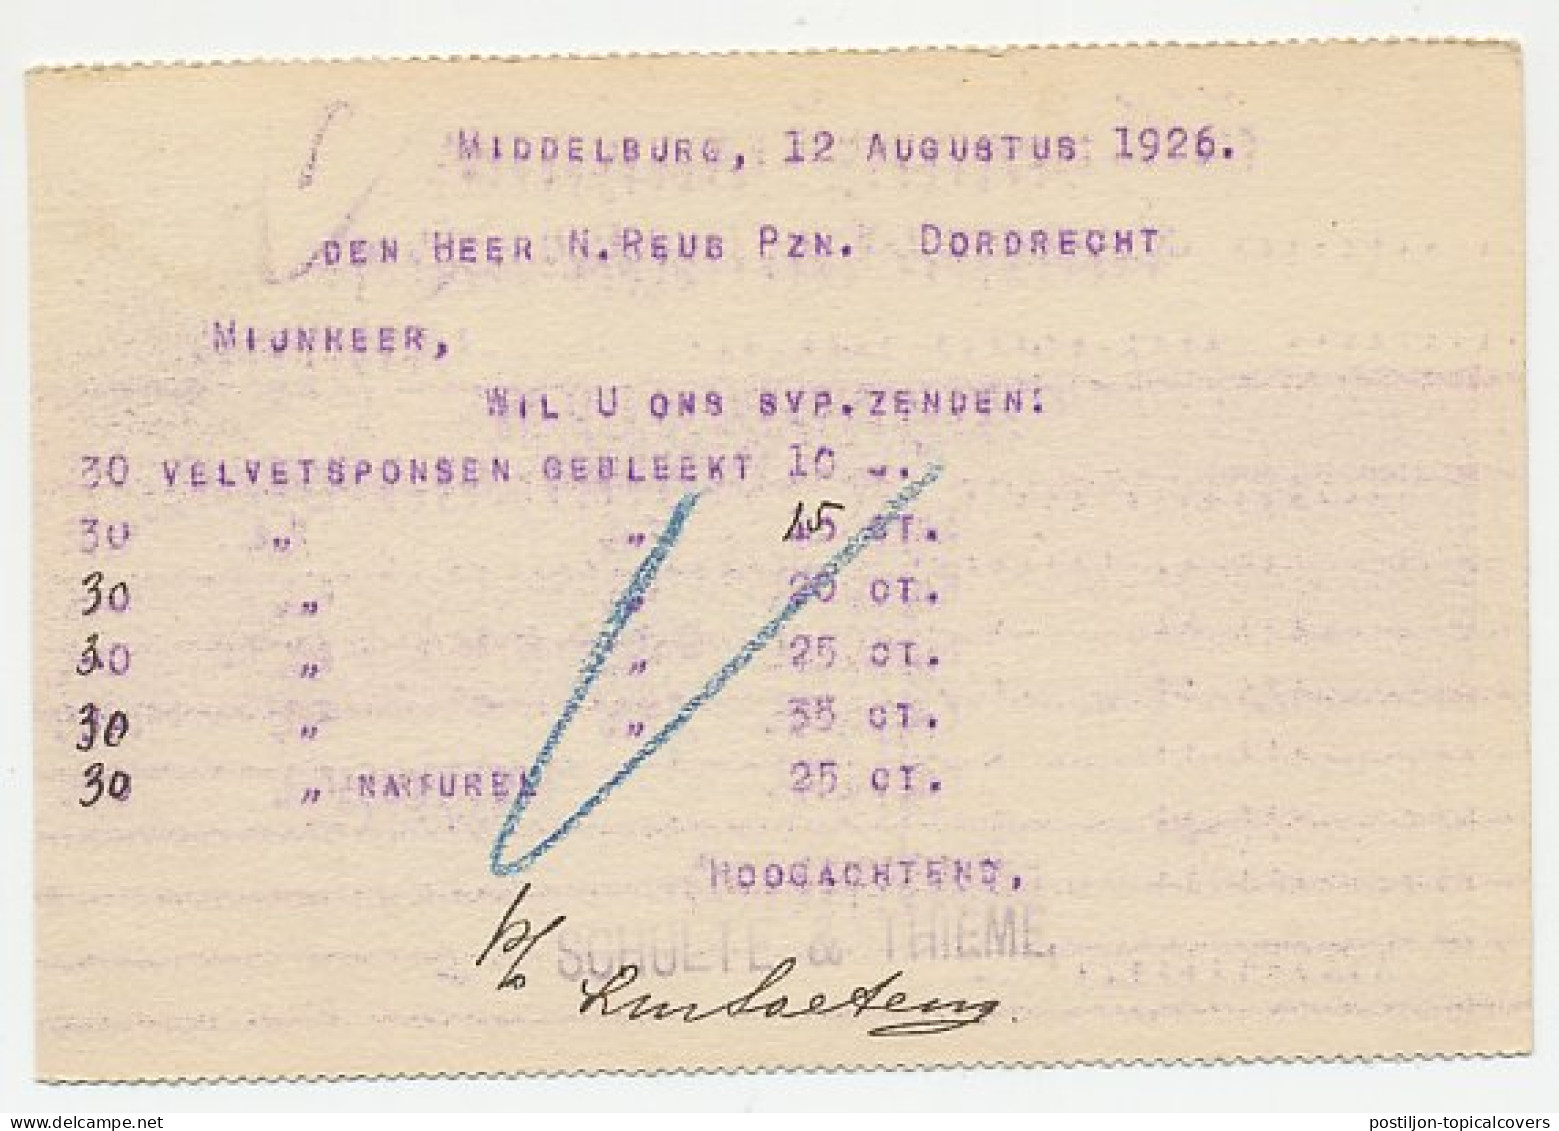 Firma Briefkaart Middelburg 1926 - Schulte En Thieme - Unclassified